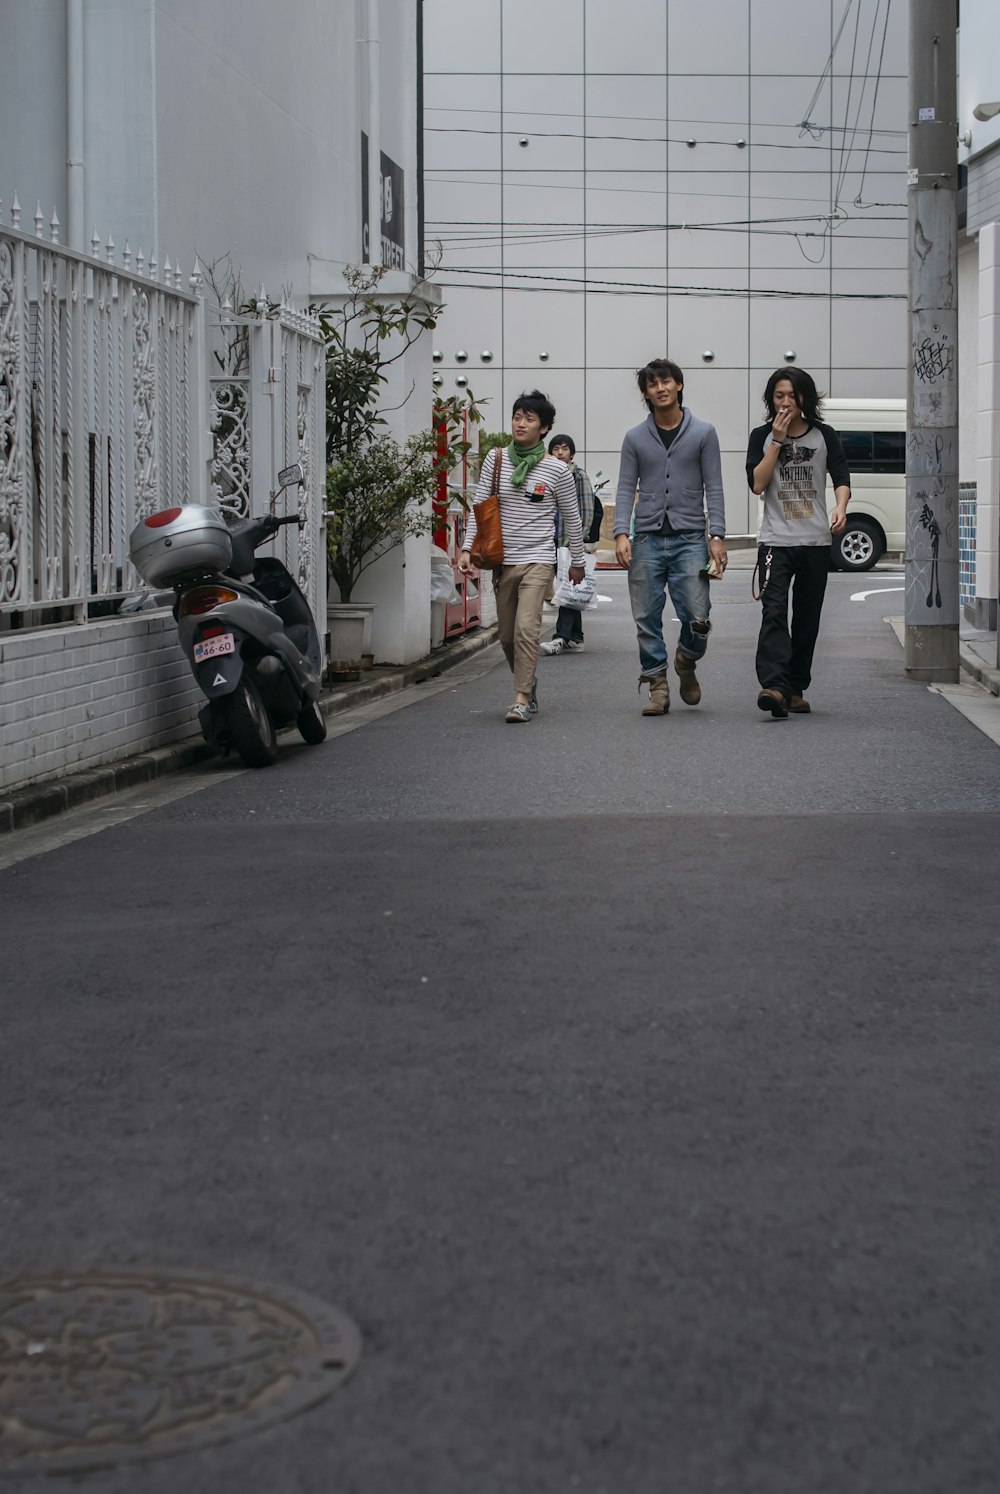 man in blue dress shirt and woman in white t-shirt walking on sidewalk during daytime